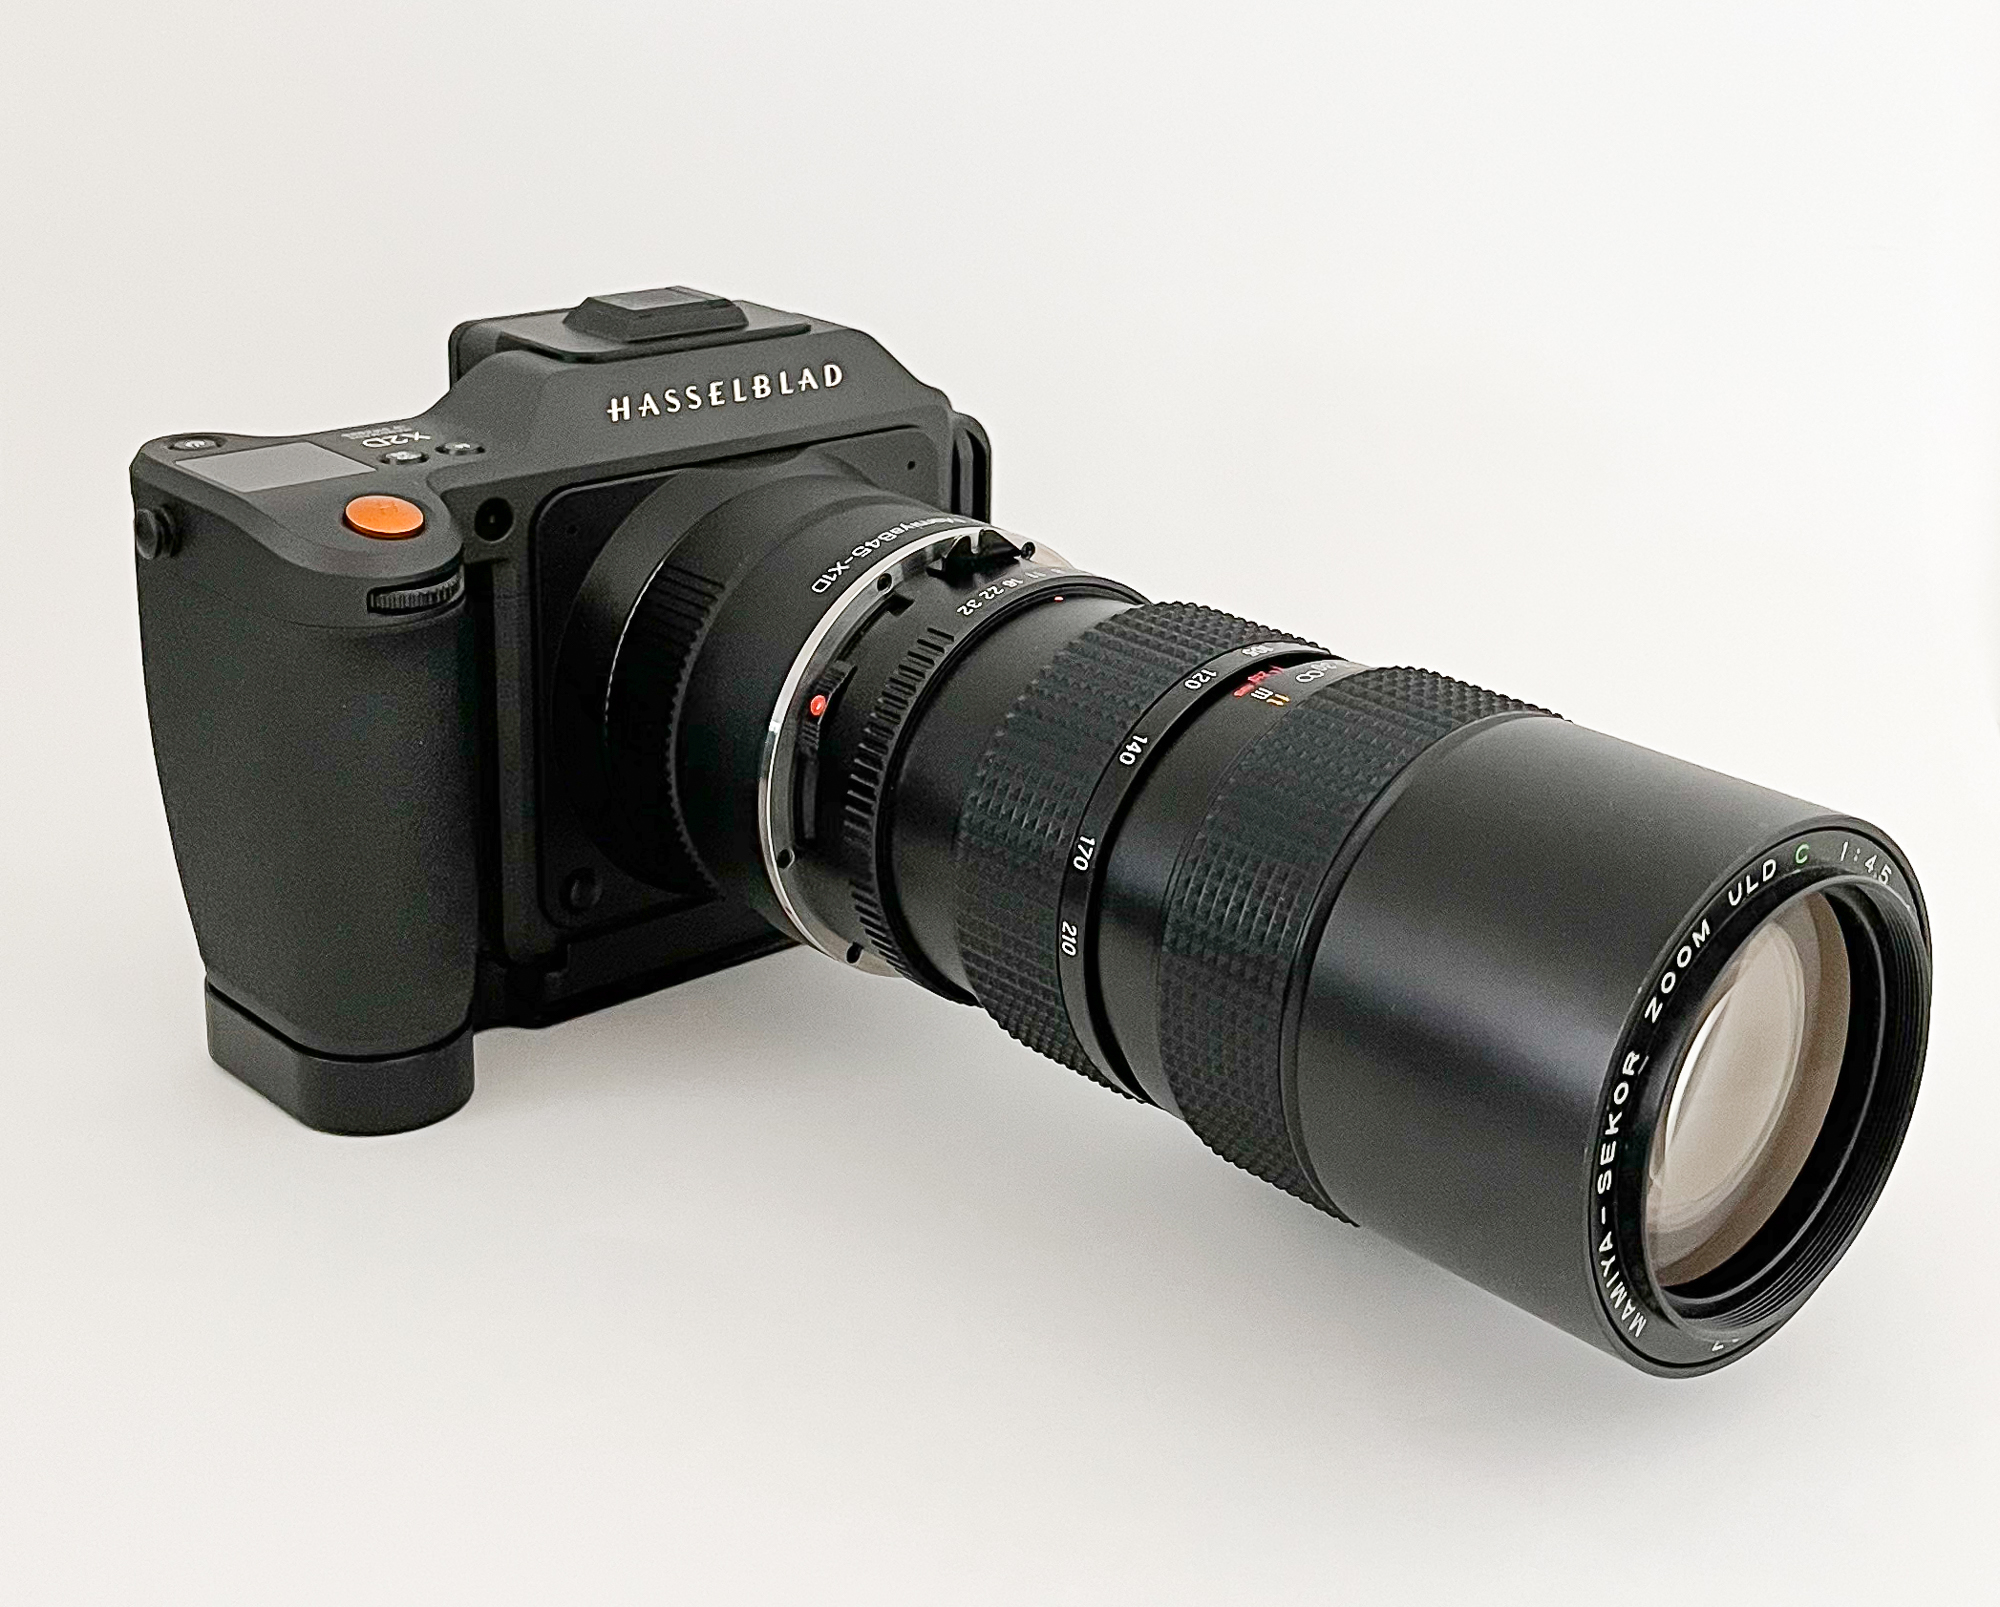 Mamiya 645 105-210mm f4.5 ULD zoom on Hasselblad X2D